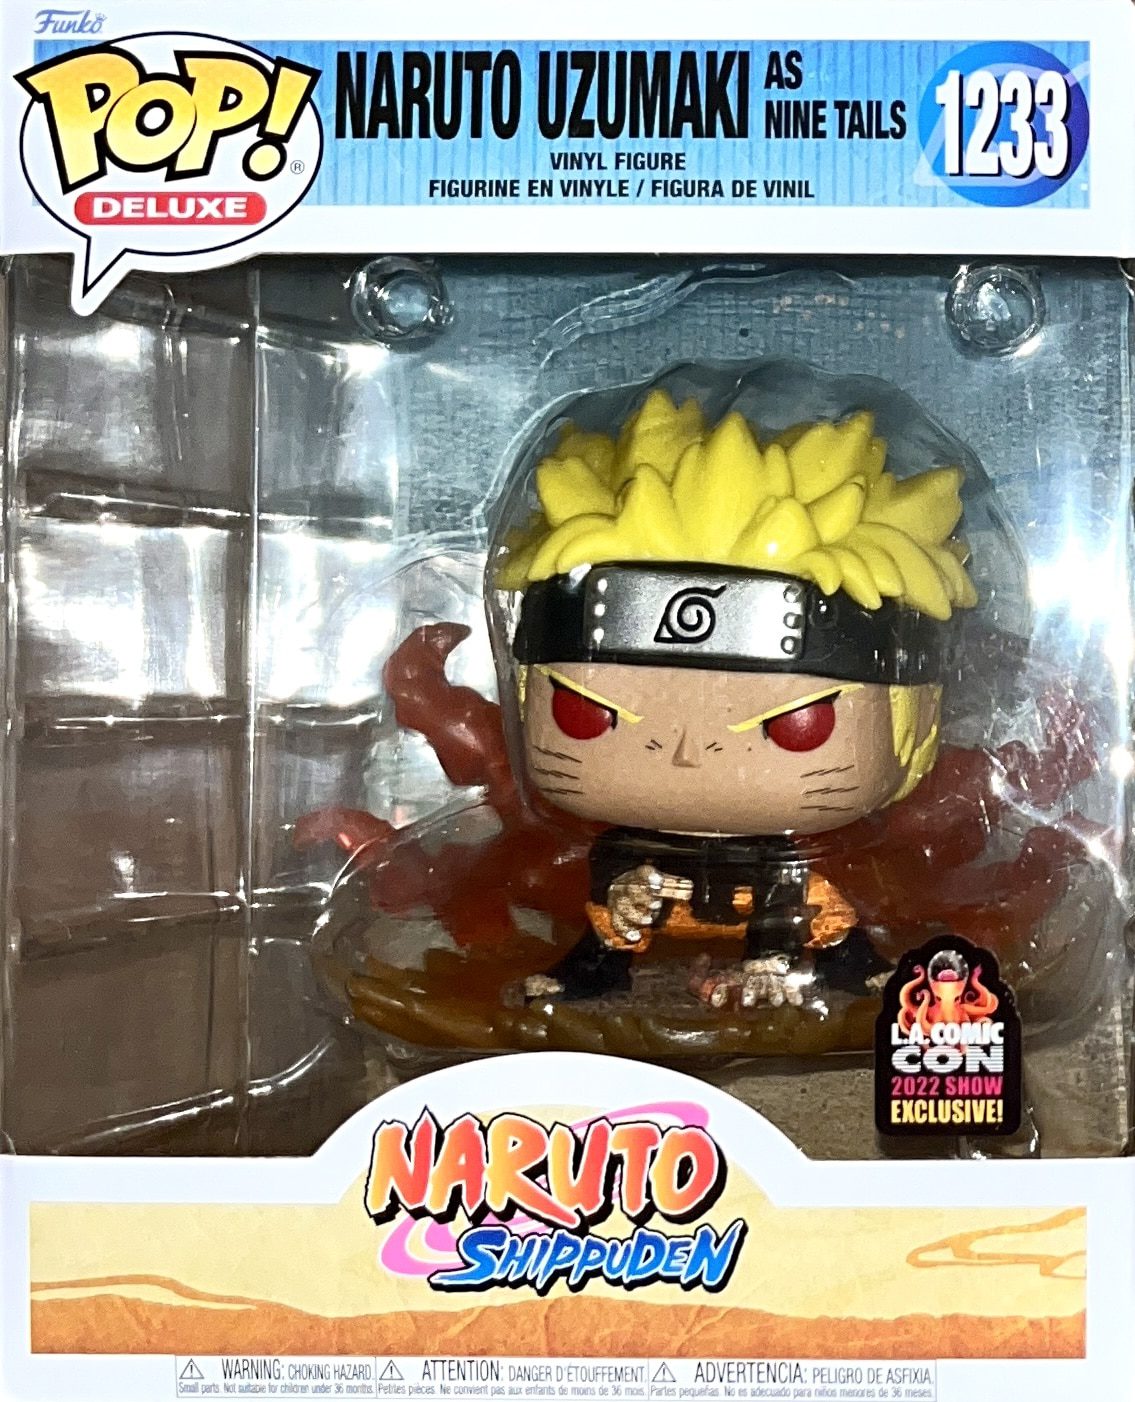 Figurine Naruto Uzumaki As Nine Tails / Naruto / Funko Pop Animation 1233 /  Exclusive L.A Comic